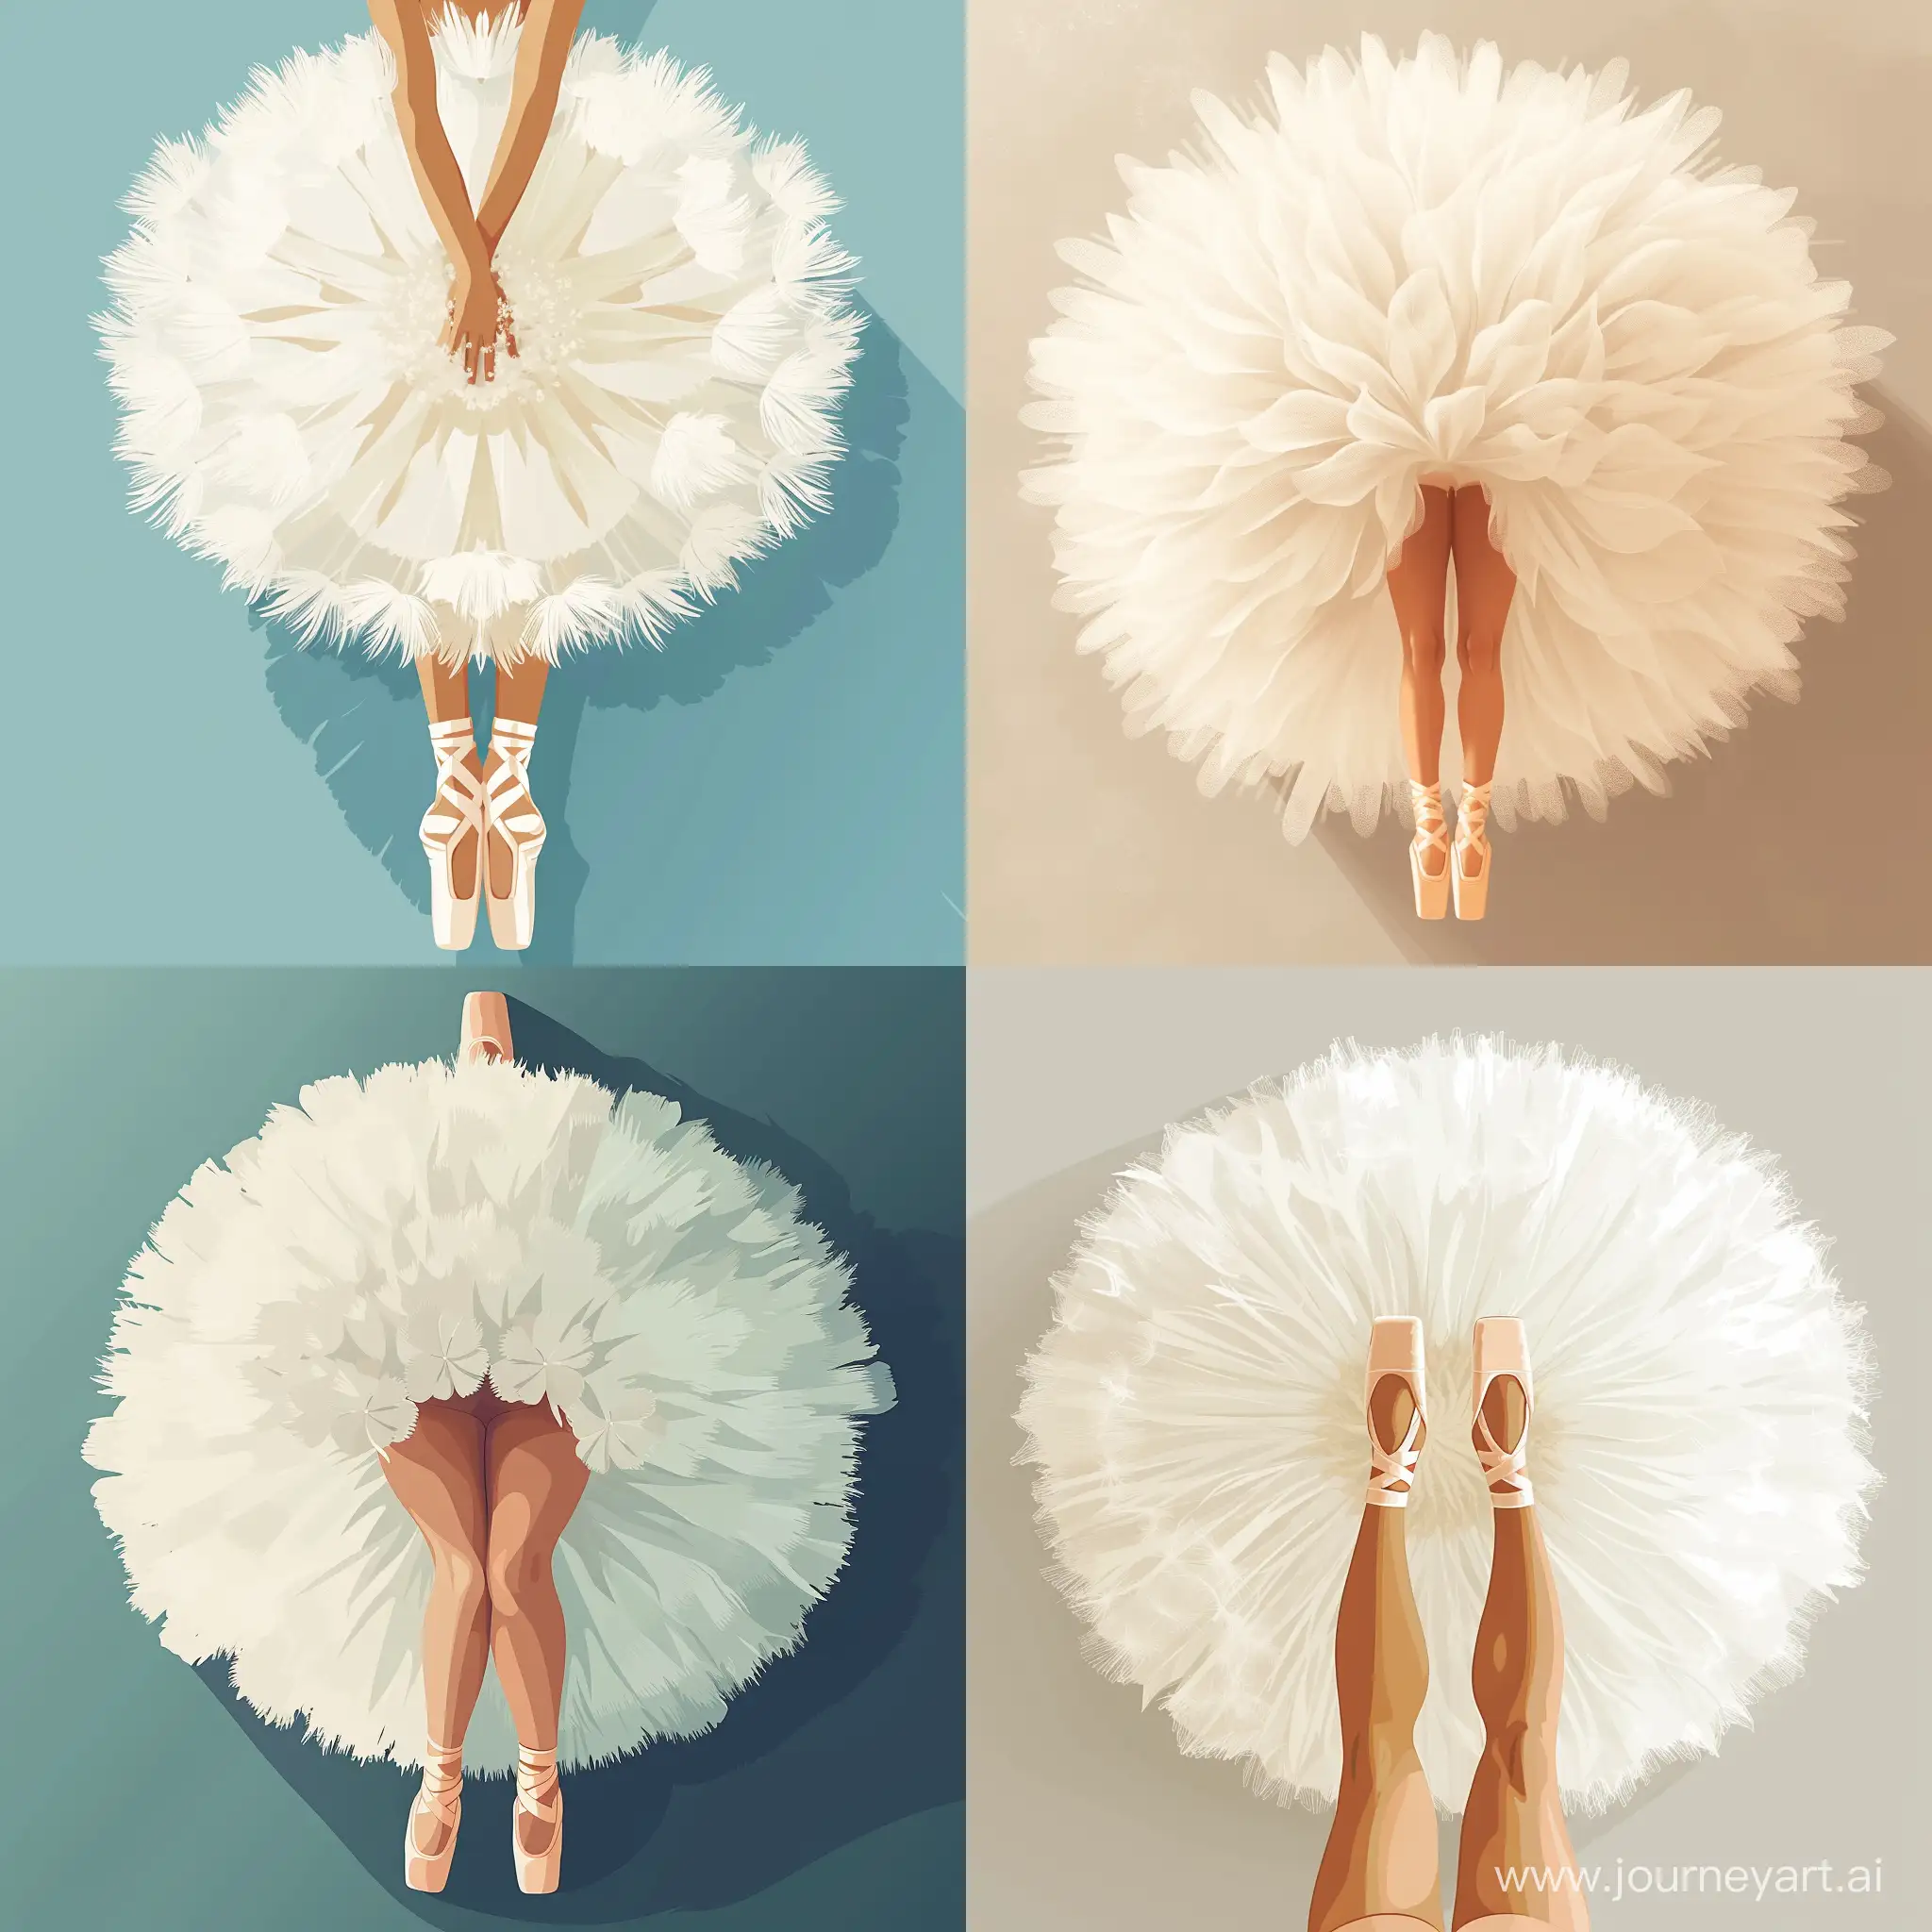 Graceful-Ballet-Dancer-in-Stunning-White-Tutu